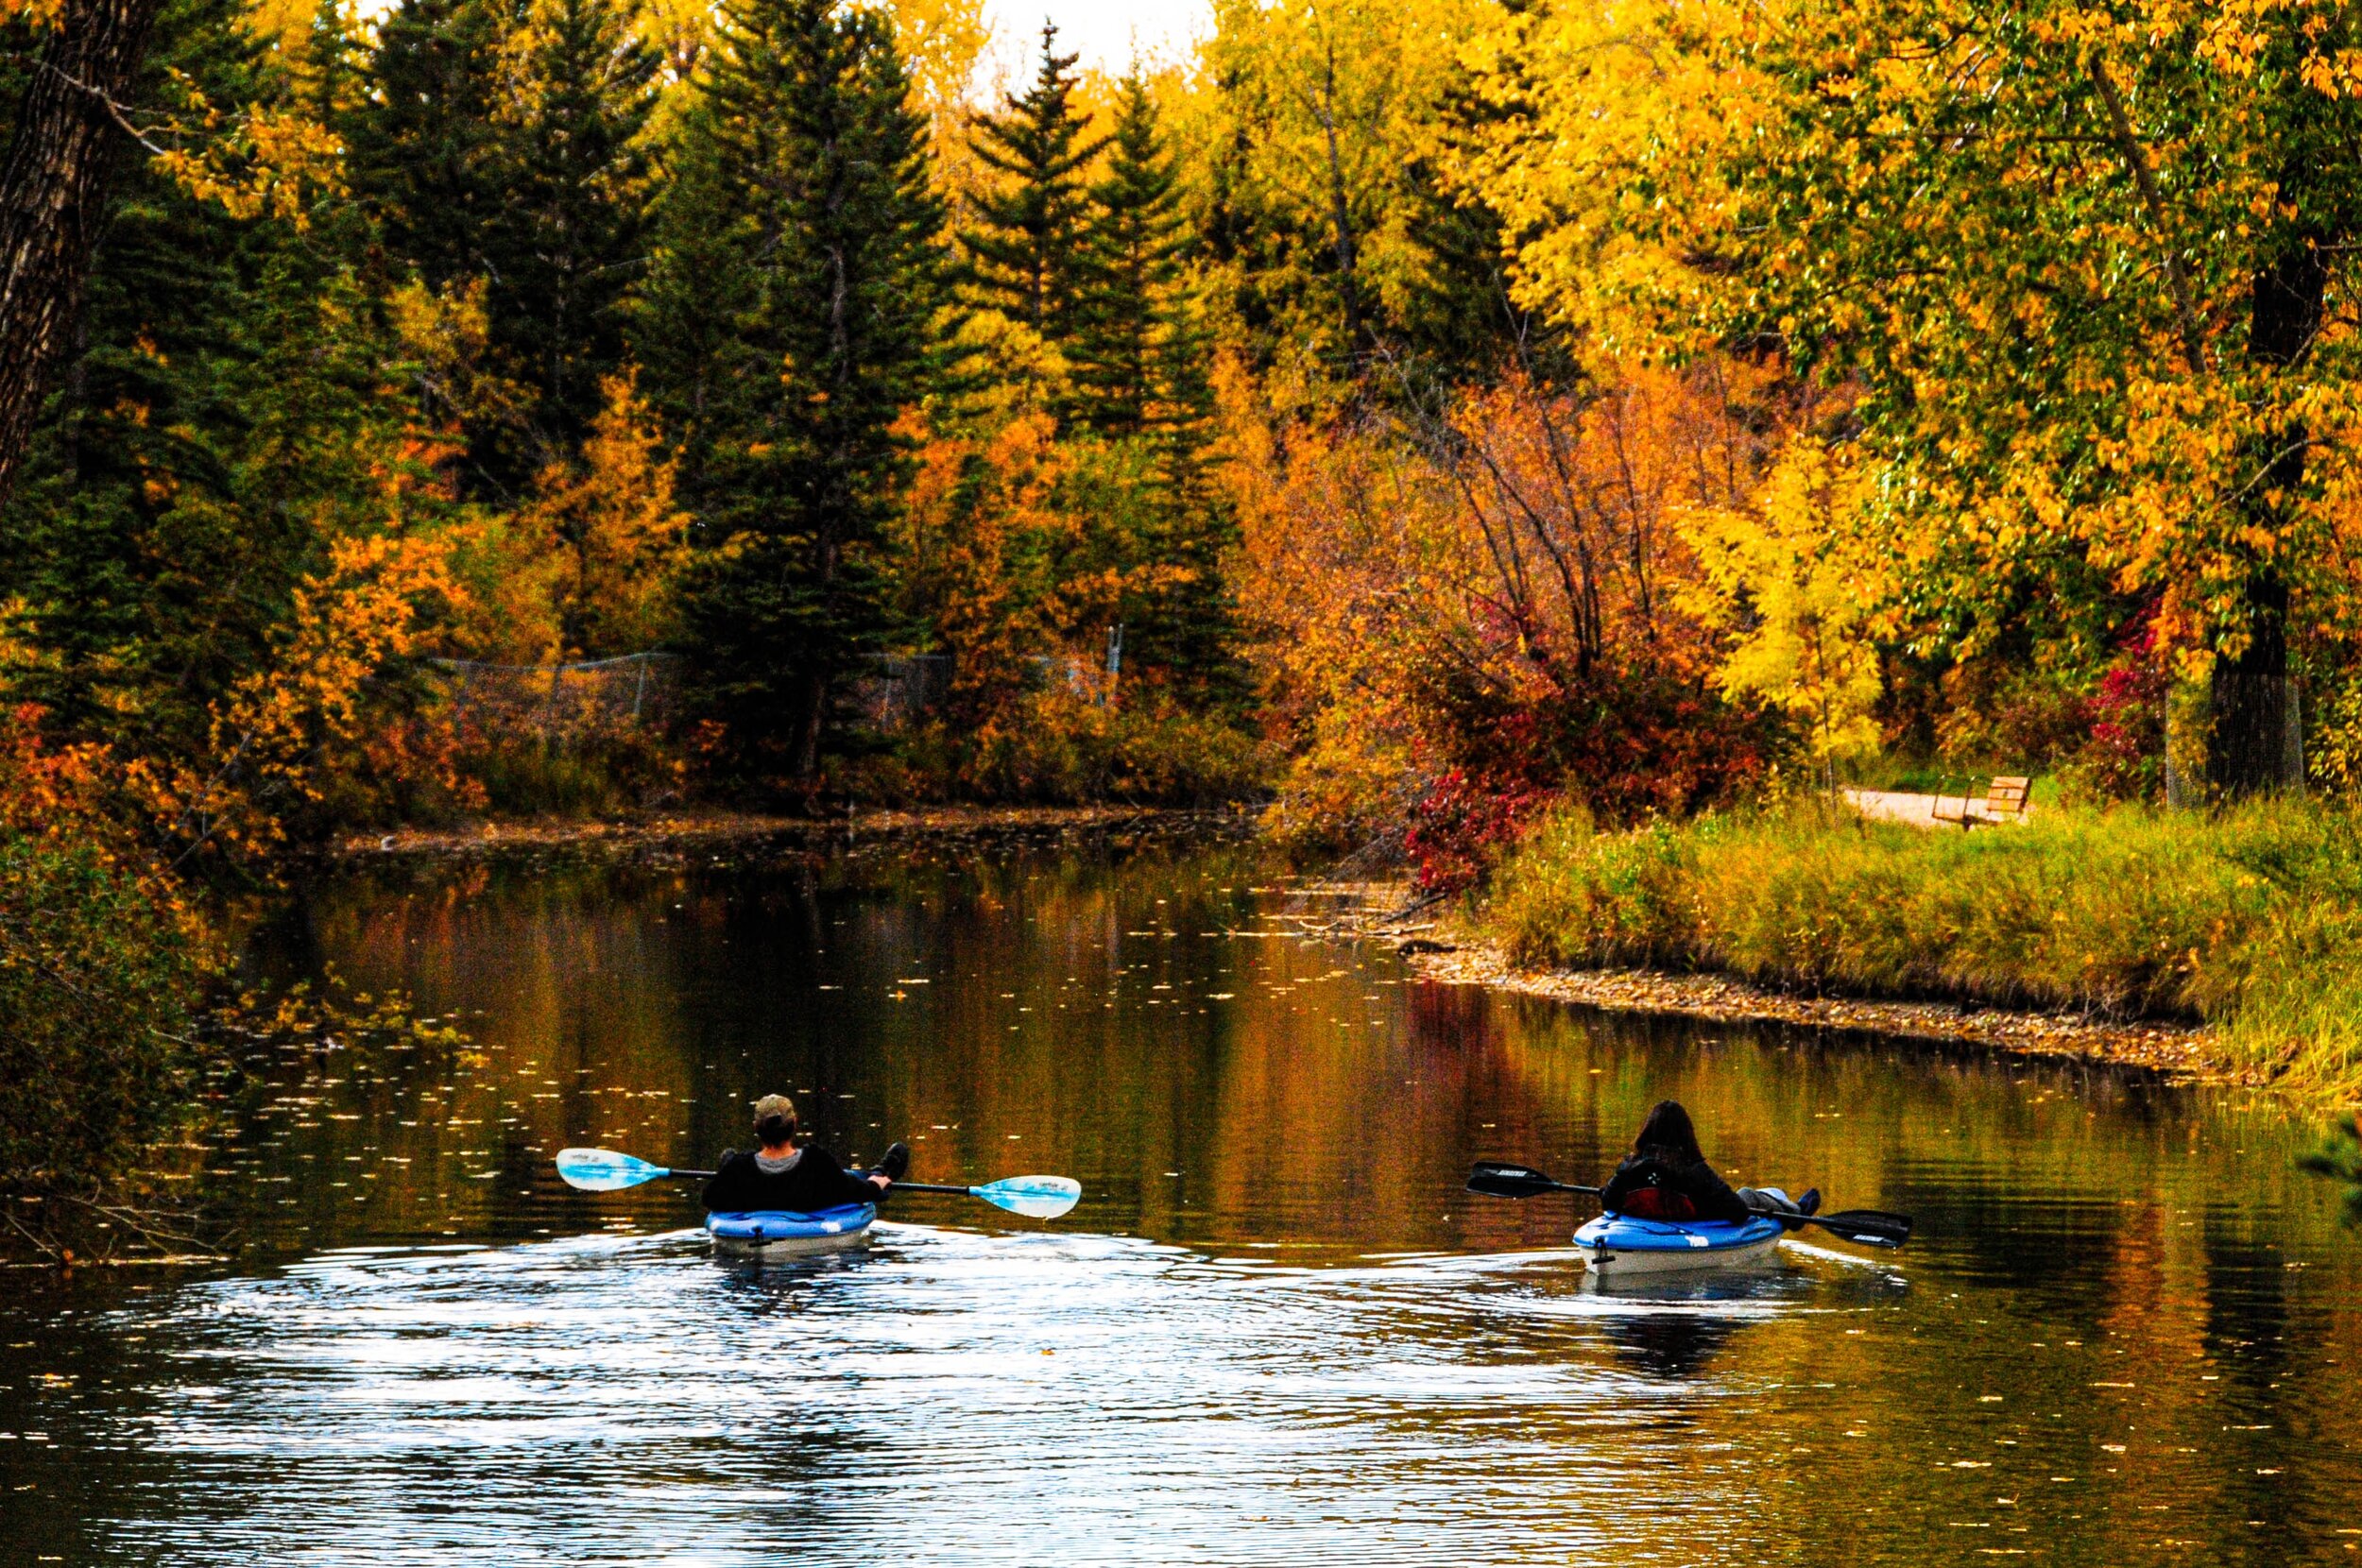 Canoe and Kayaking